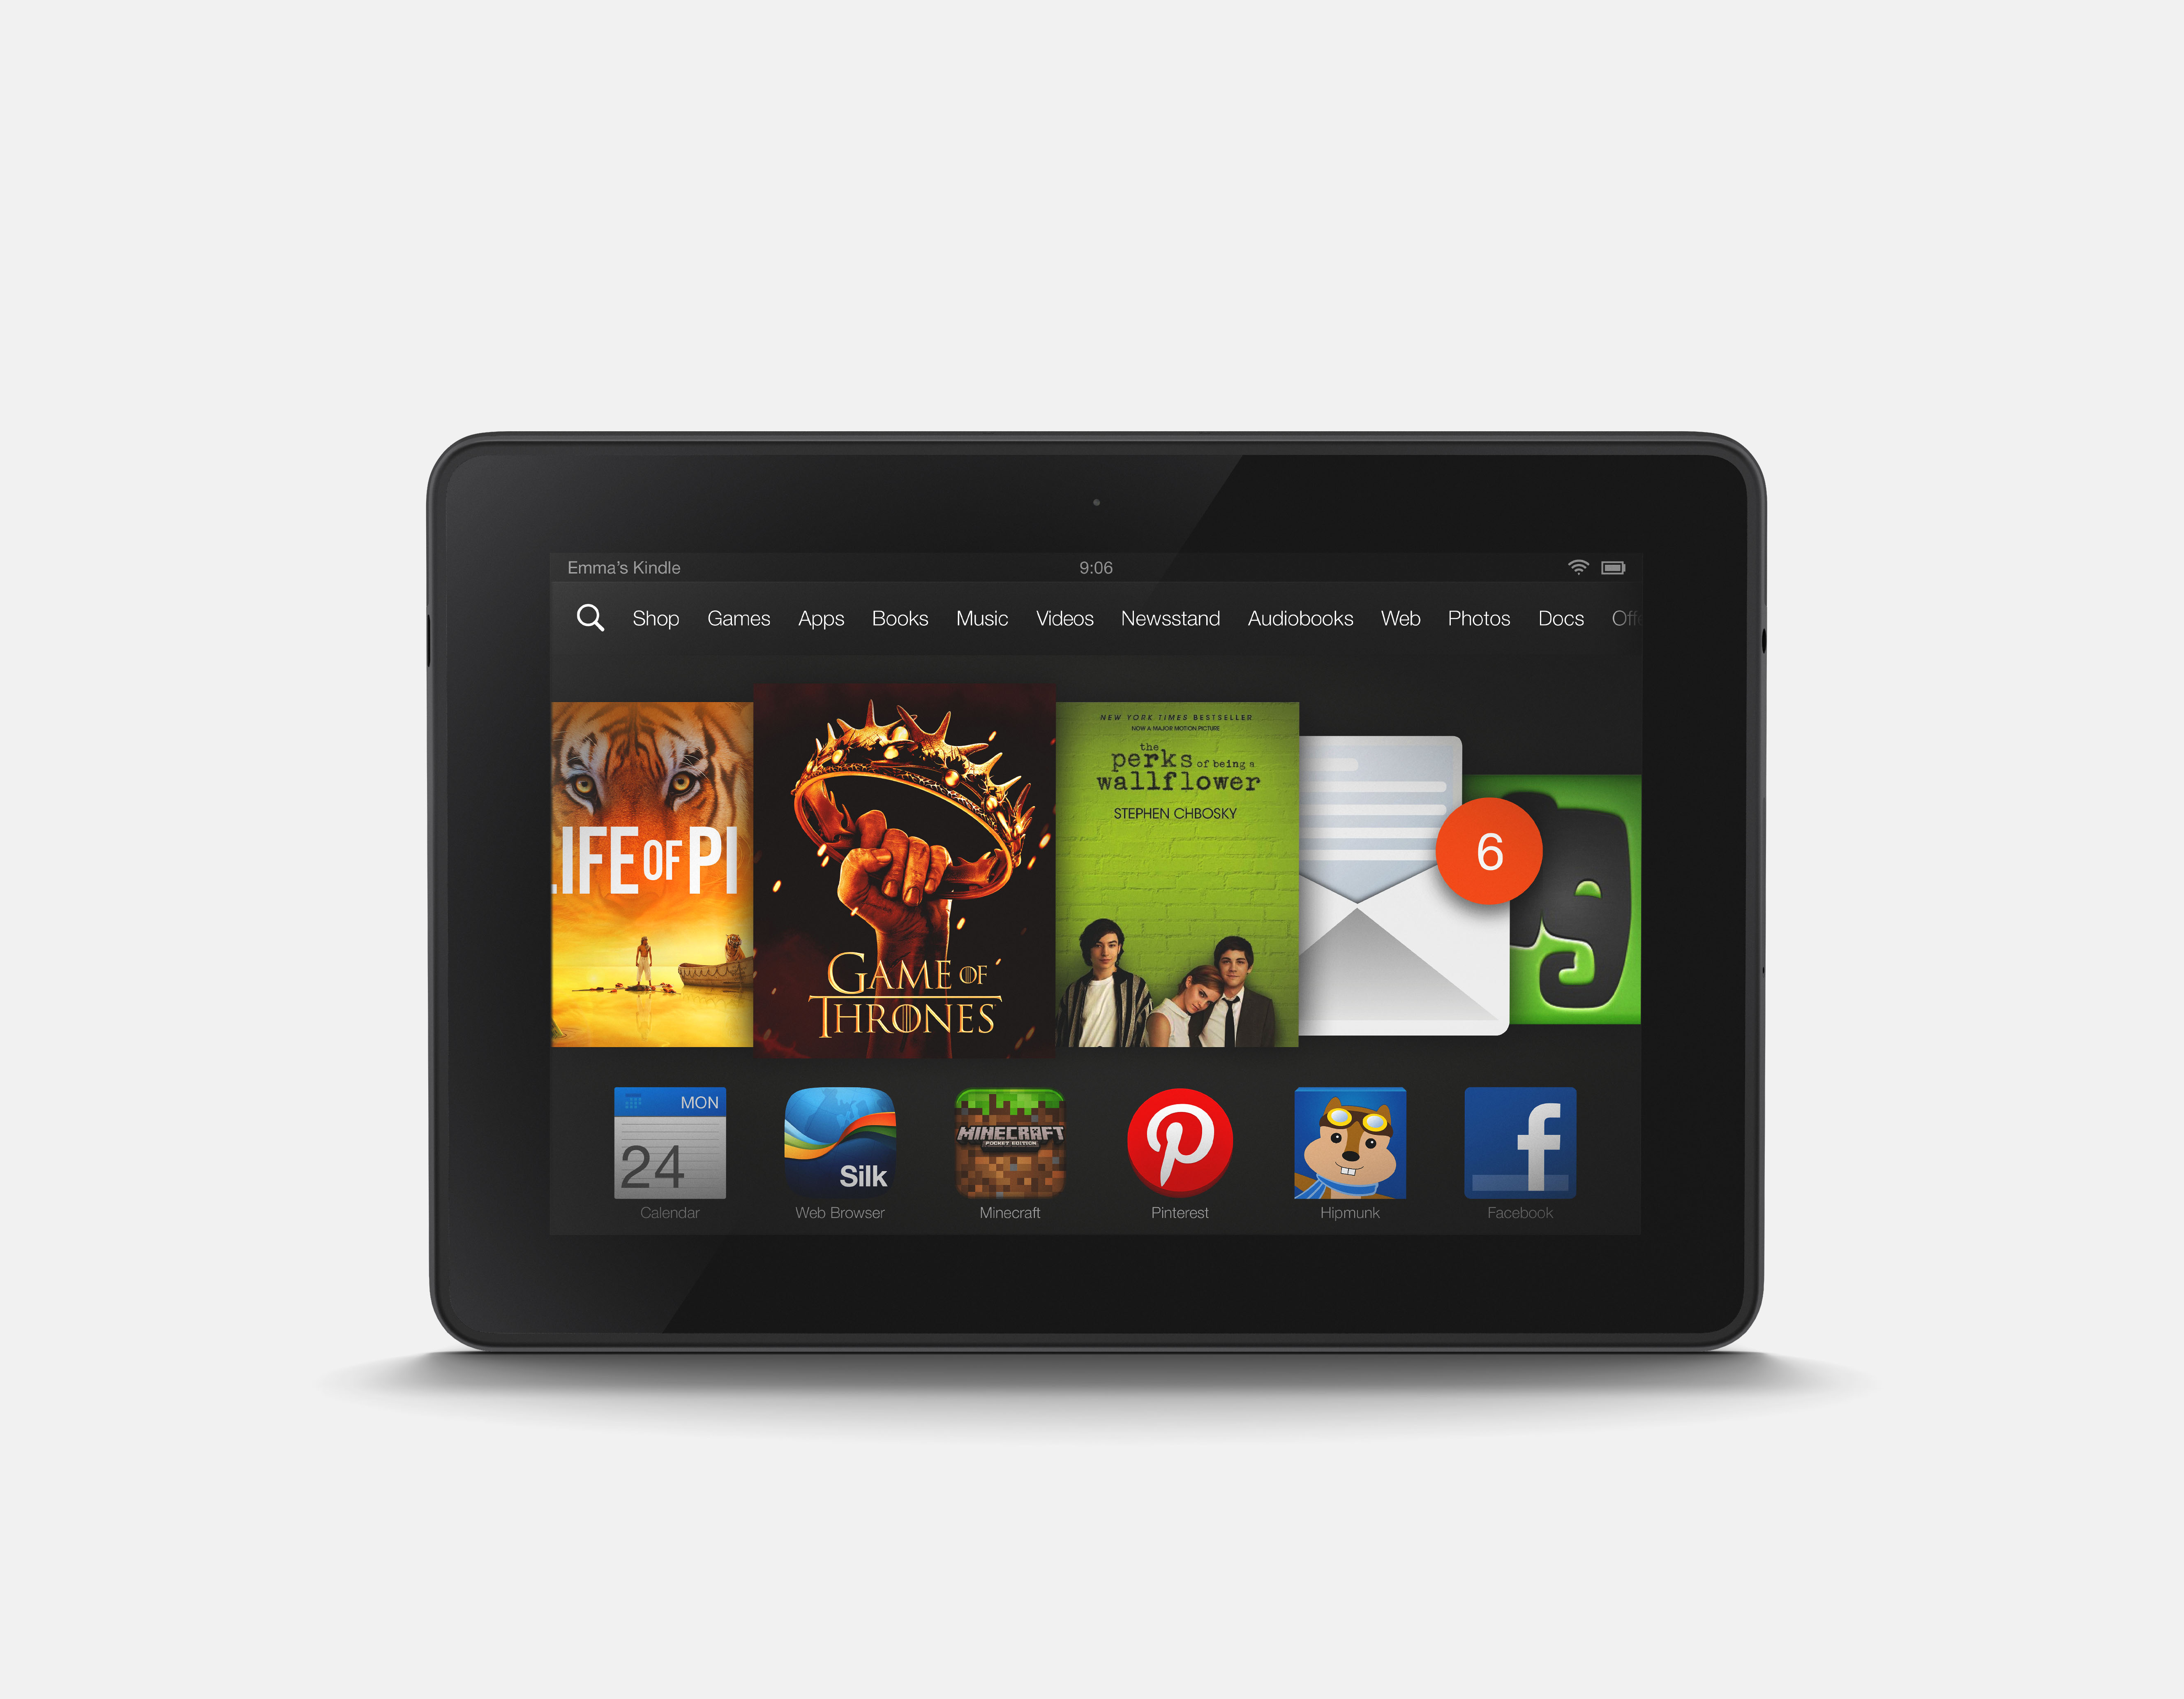 Amazon Kindle Fire HDx